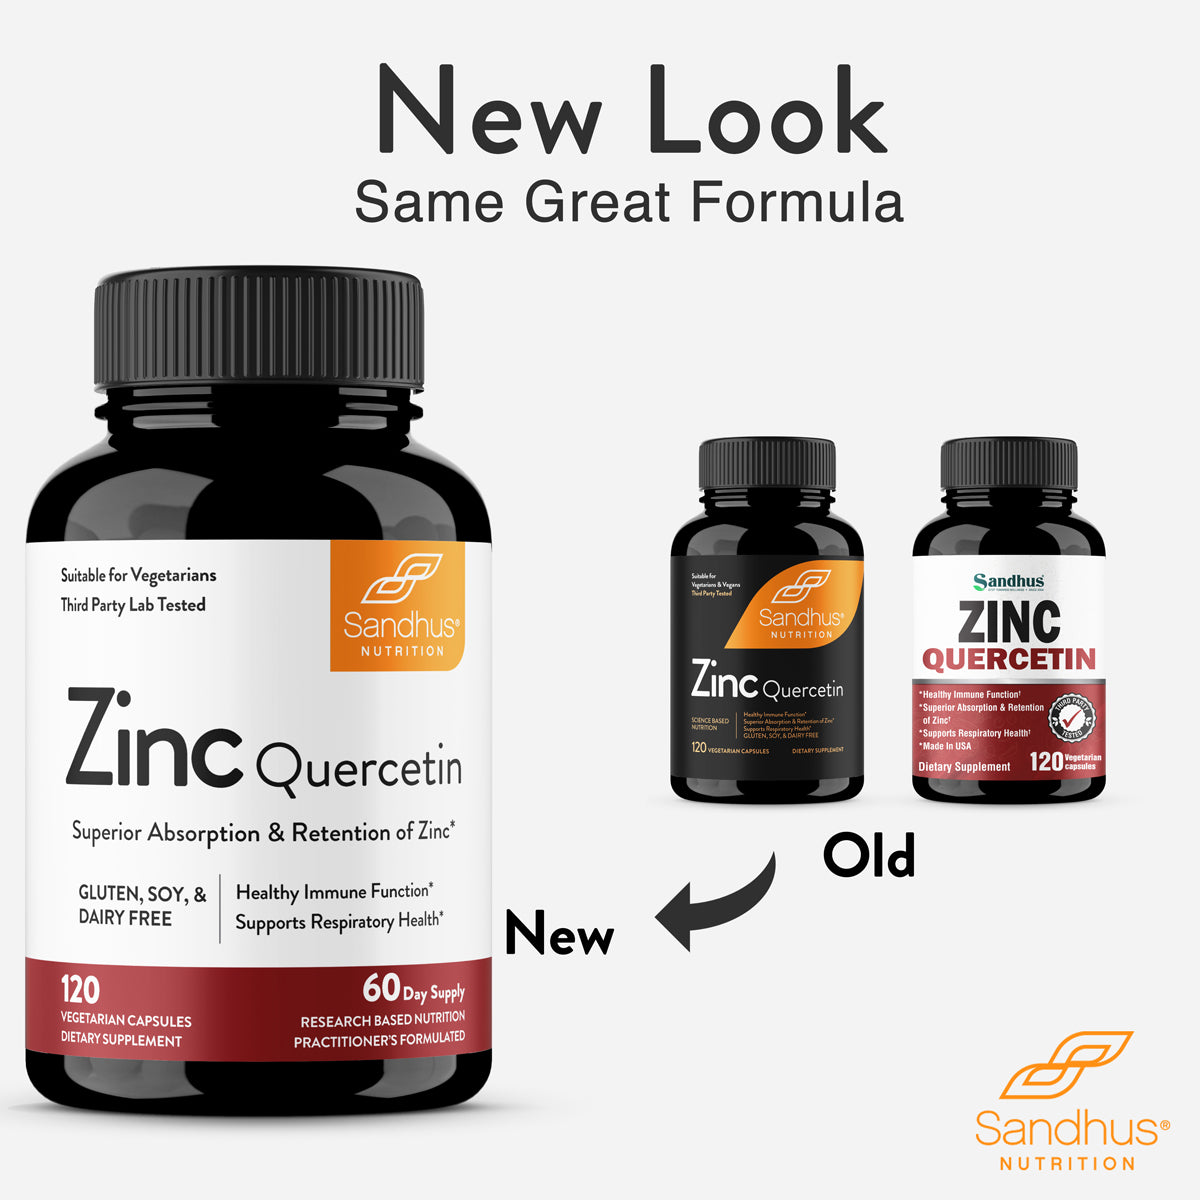 zinc-quercetin-old-new-supplement